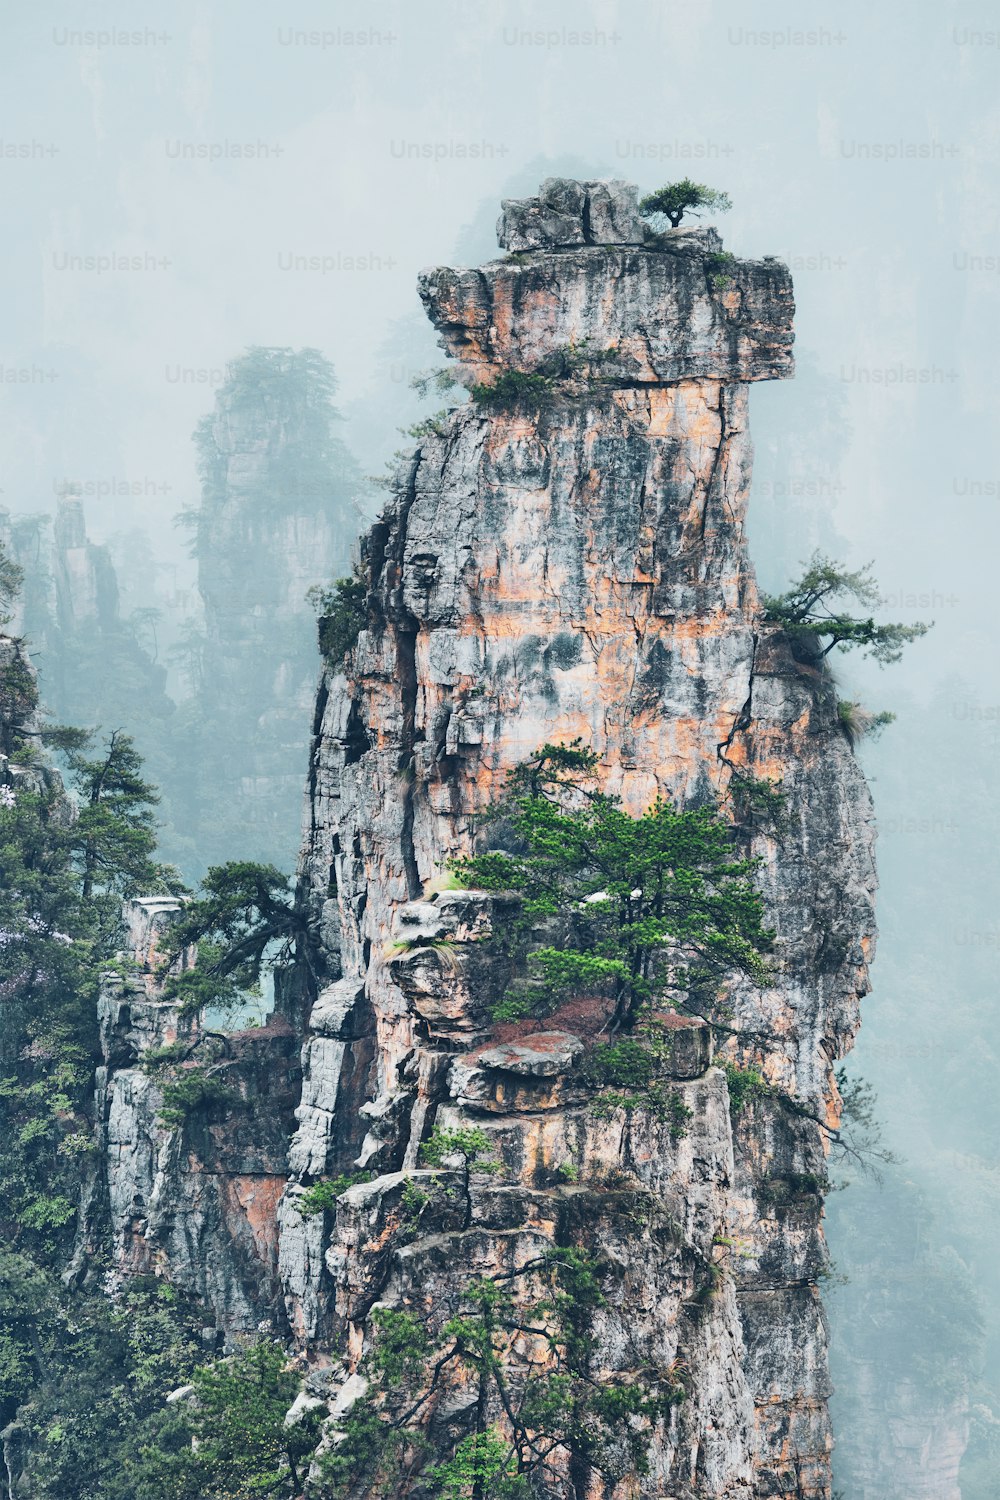 中国の有名な観光名所 - 武陵源、湖南省、中国で霧雲の張家界石柱崖山